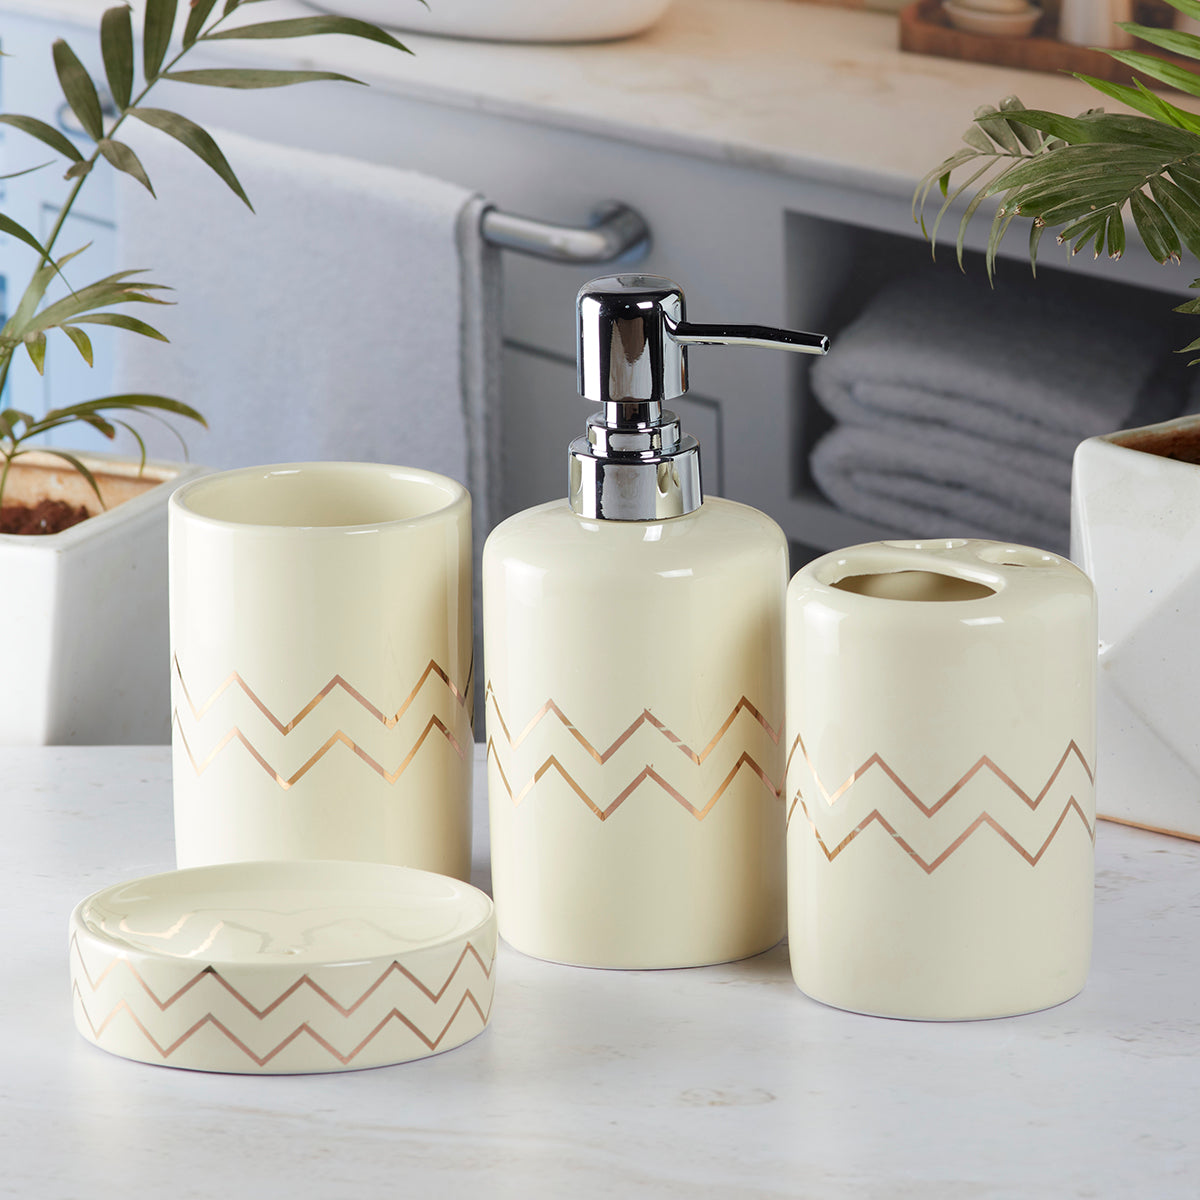 Ceramic Bathroom Accessories Set of 4 Bath Set with Soap Dispenser (8214)